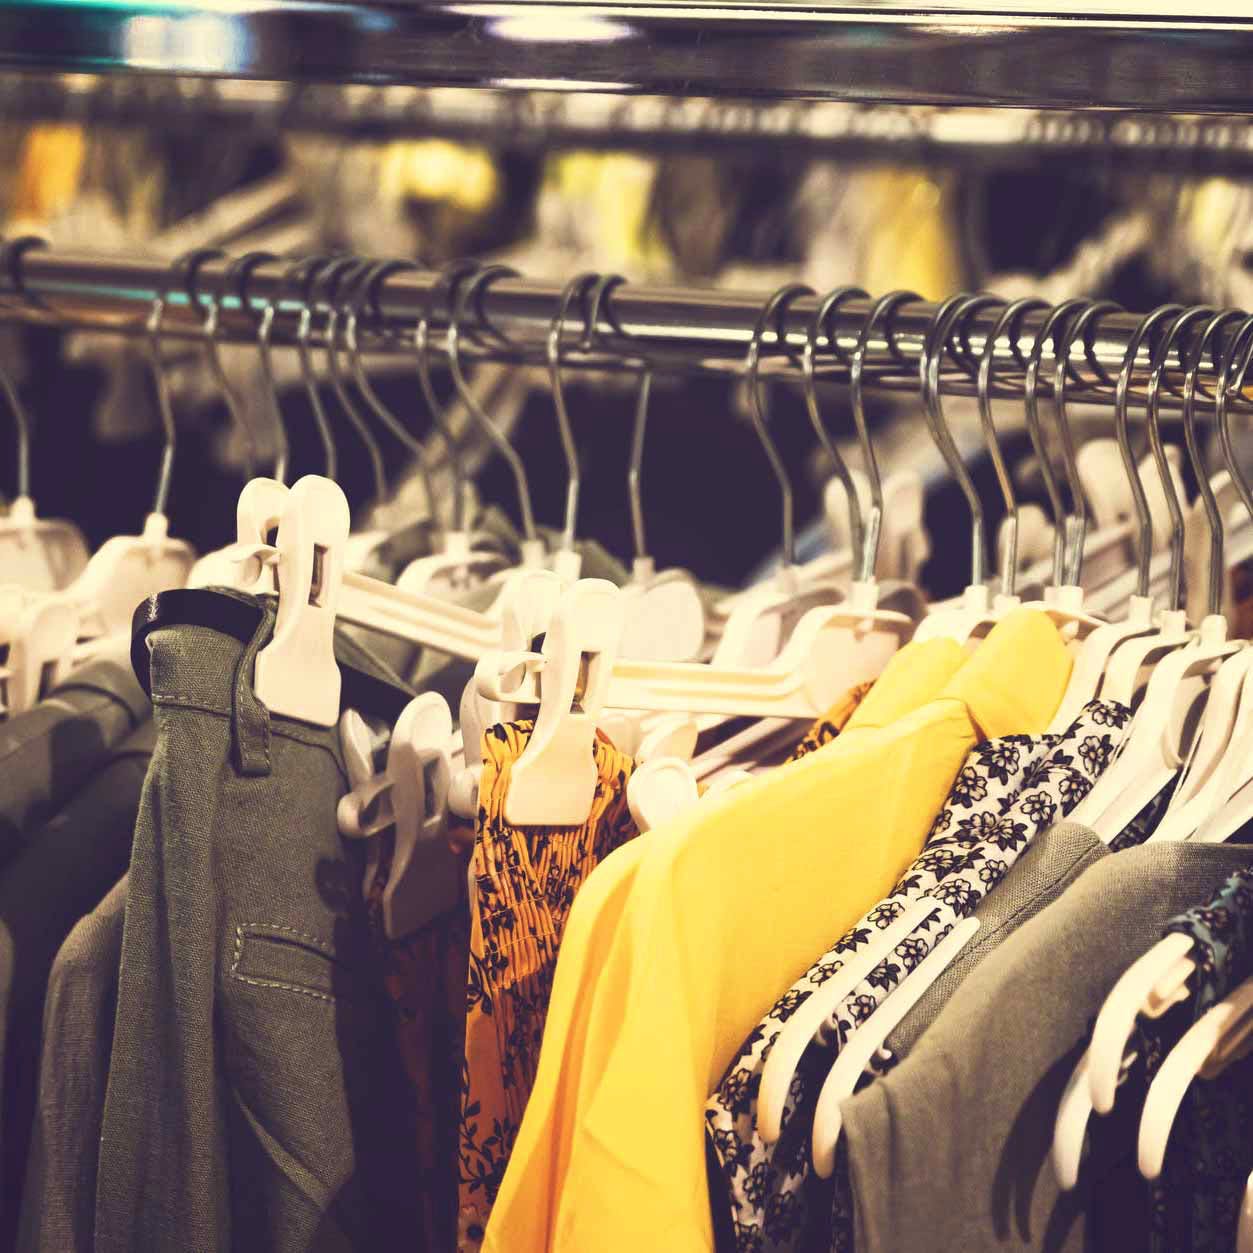 Room,Yellow,Closet,Boutique,Fashion,Footwear,Clothes hanger,T-shirt,Dress,Textile